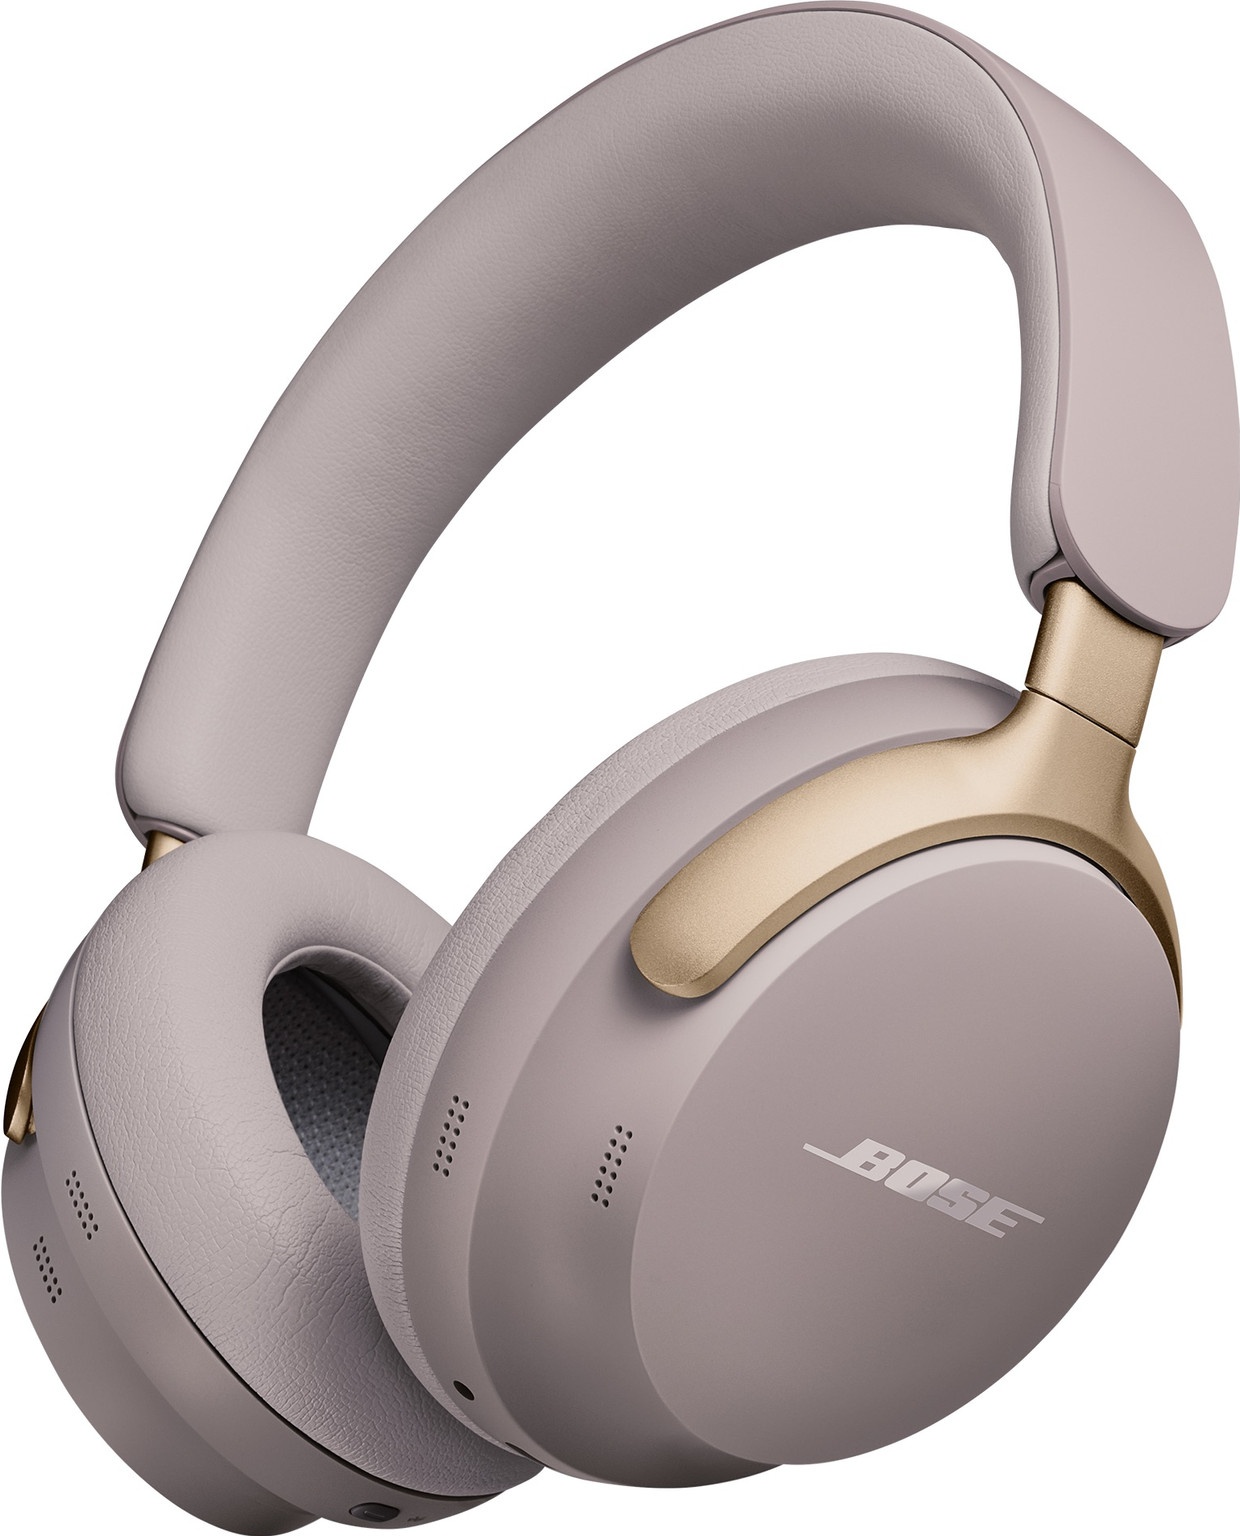 Bose QuietComfort Ultra Headphones Beige Limited Edition